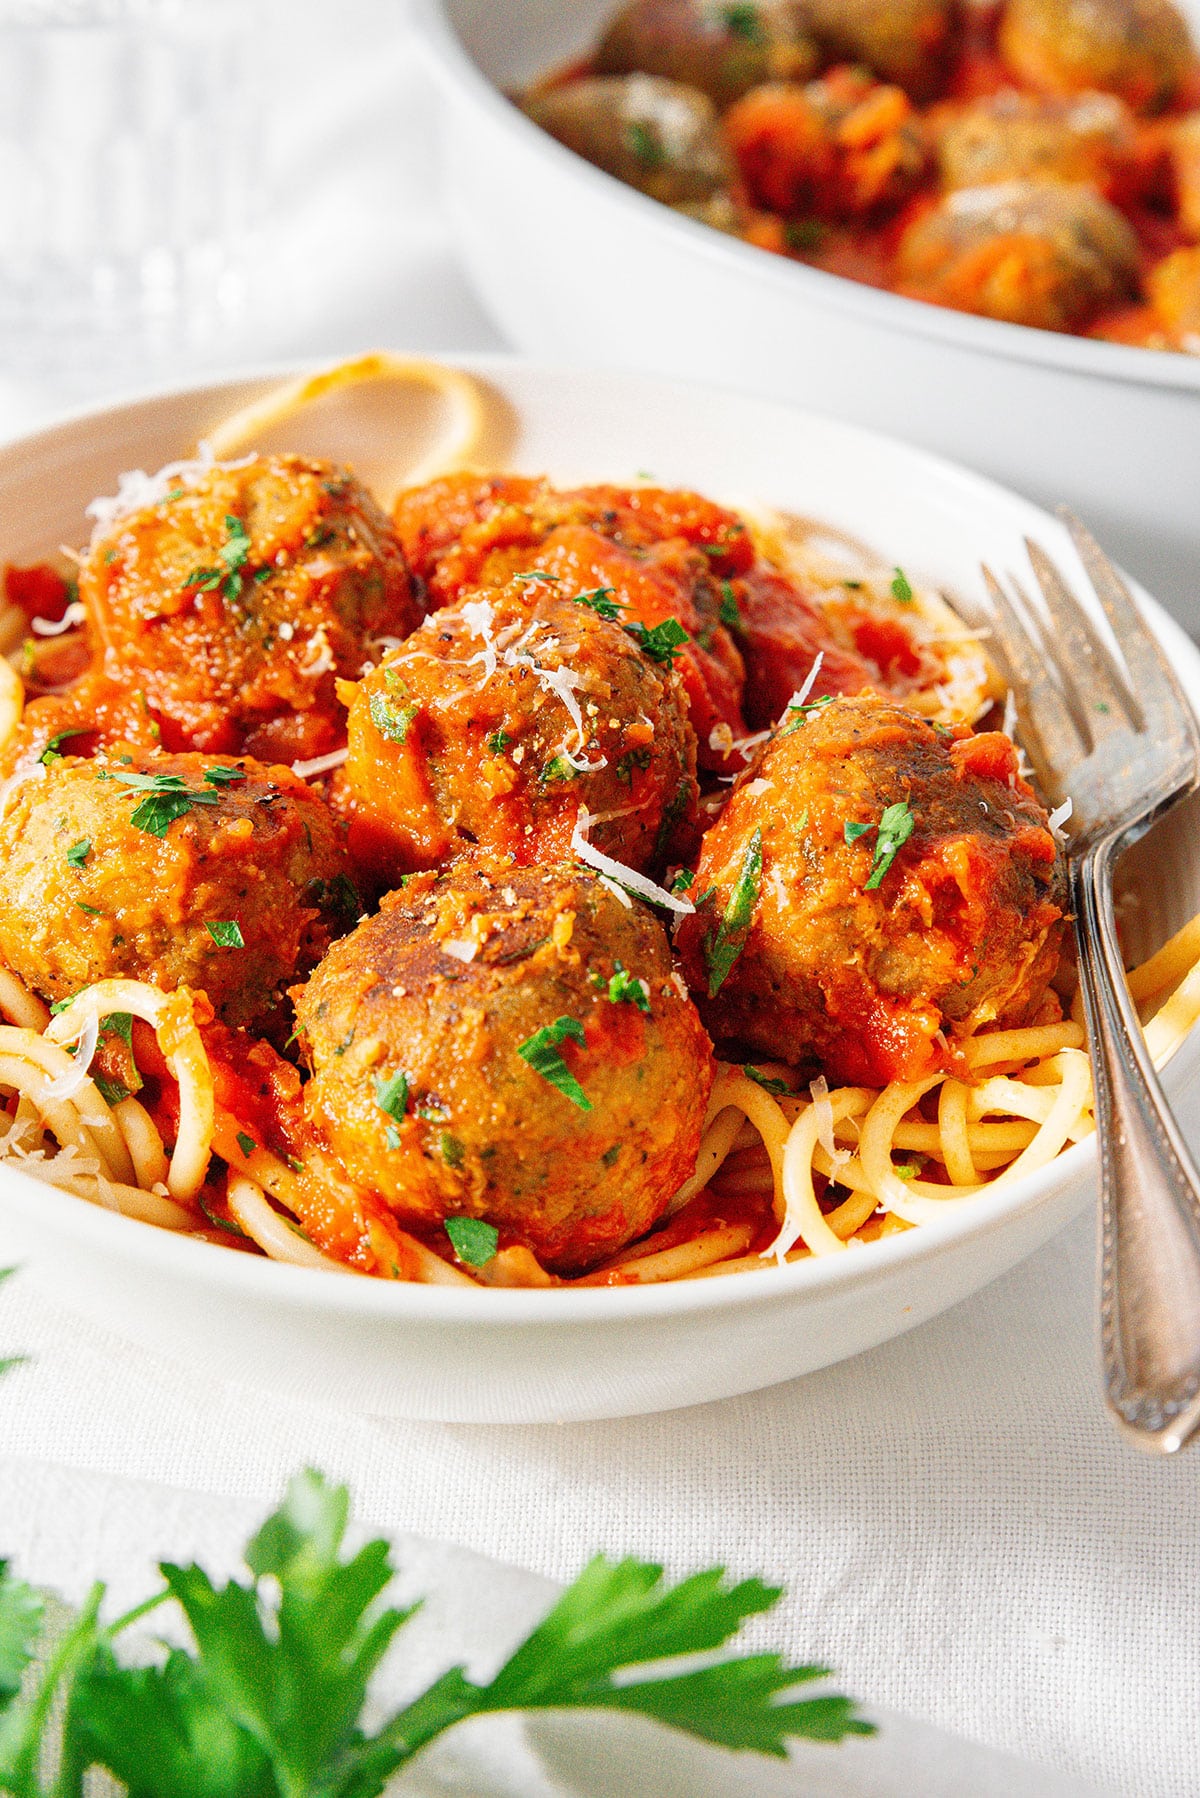 Chickpea meatballs with spaghetti and marinara sauce.